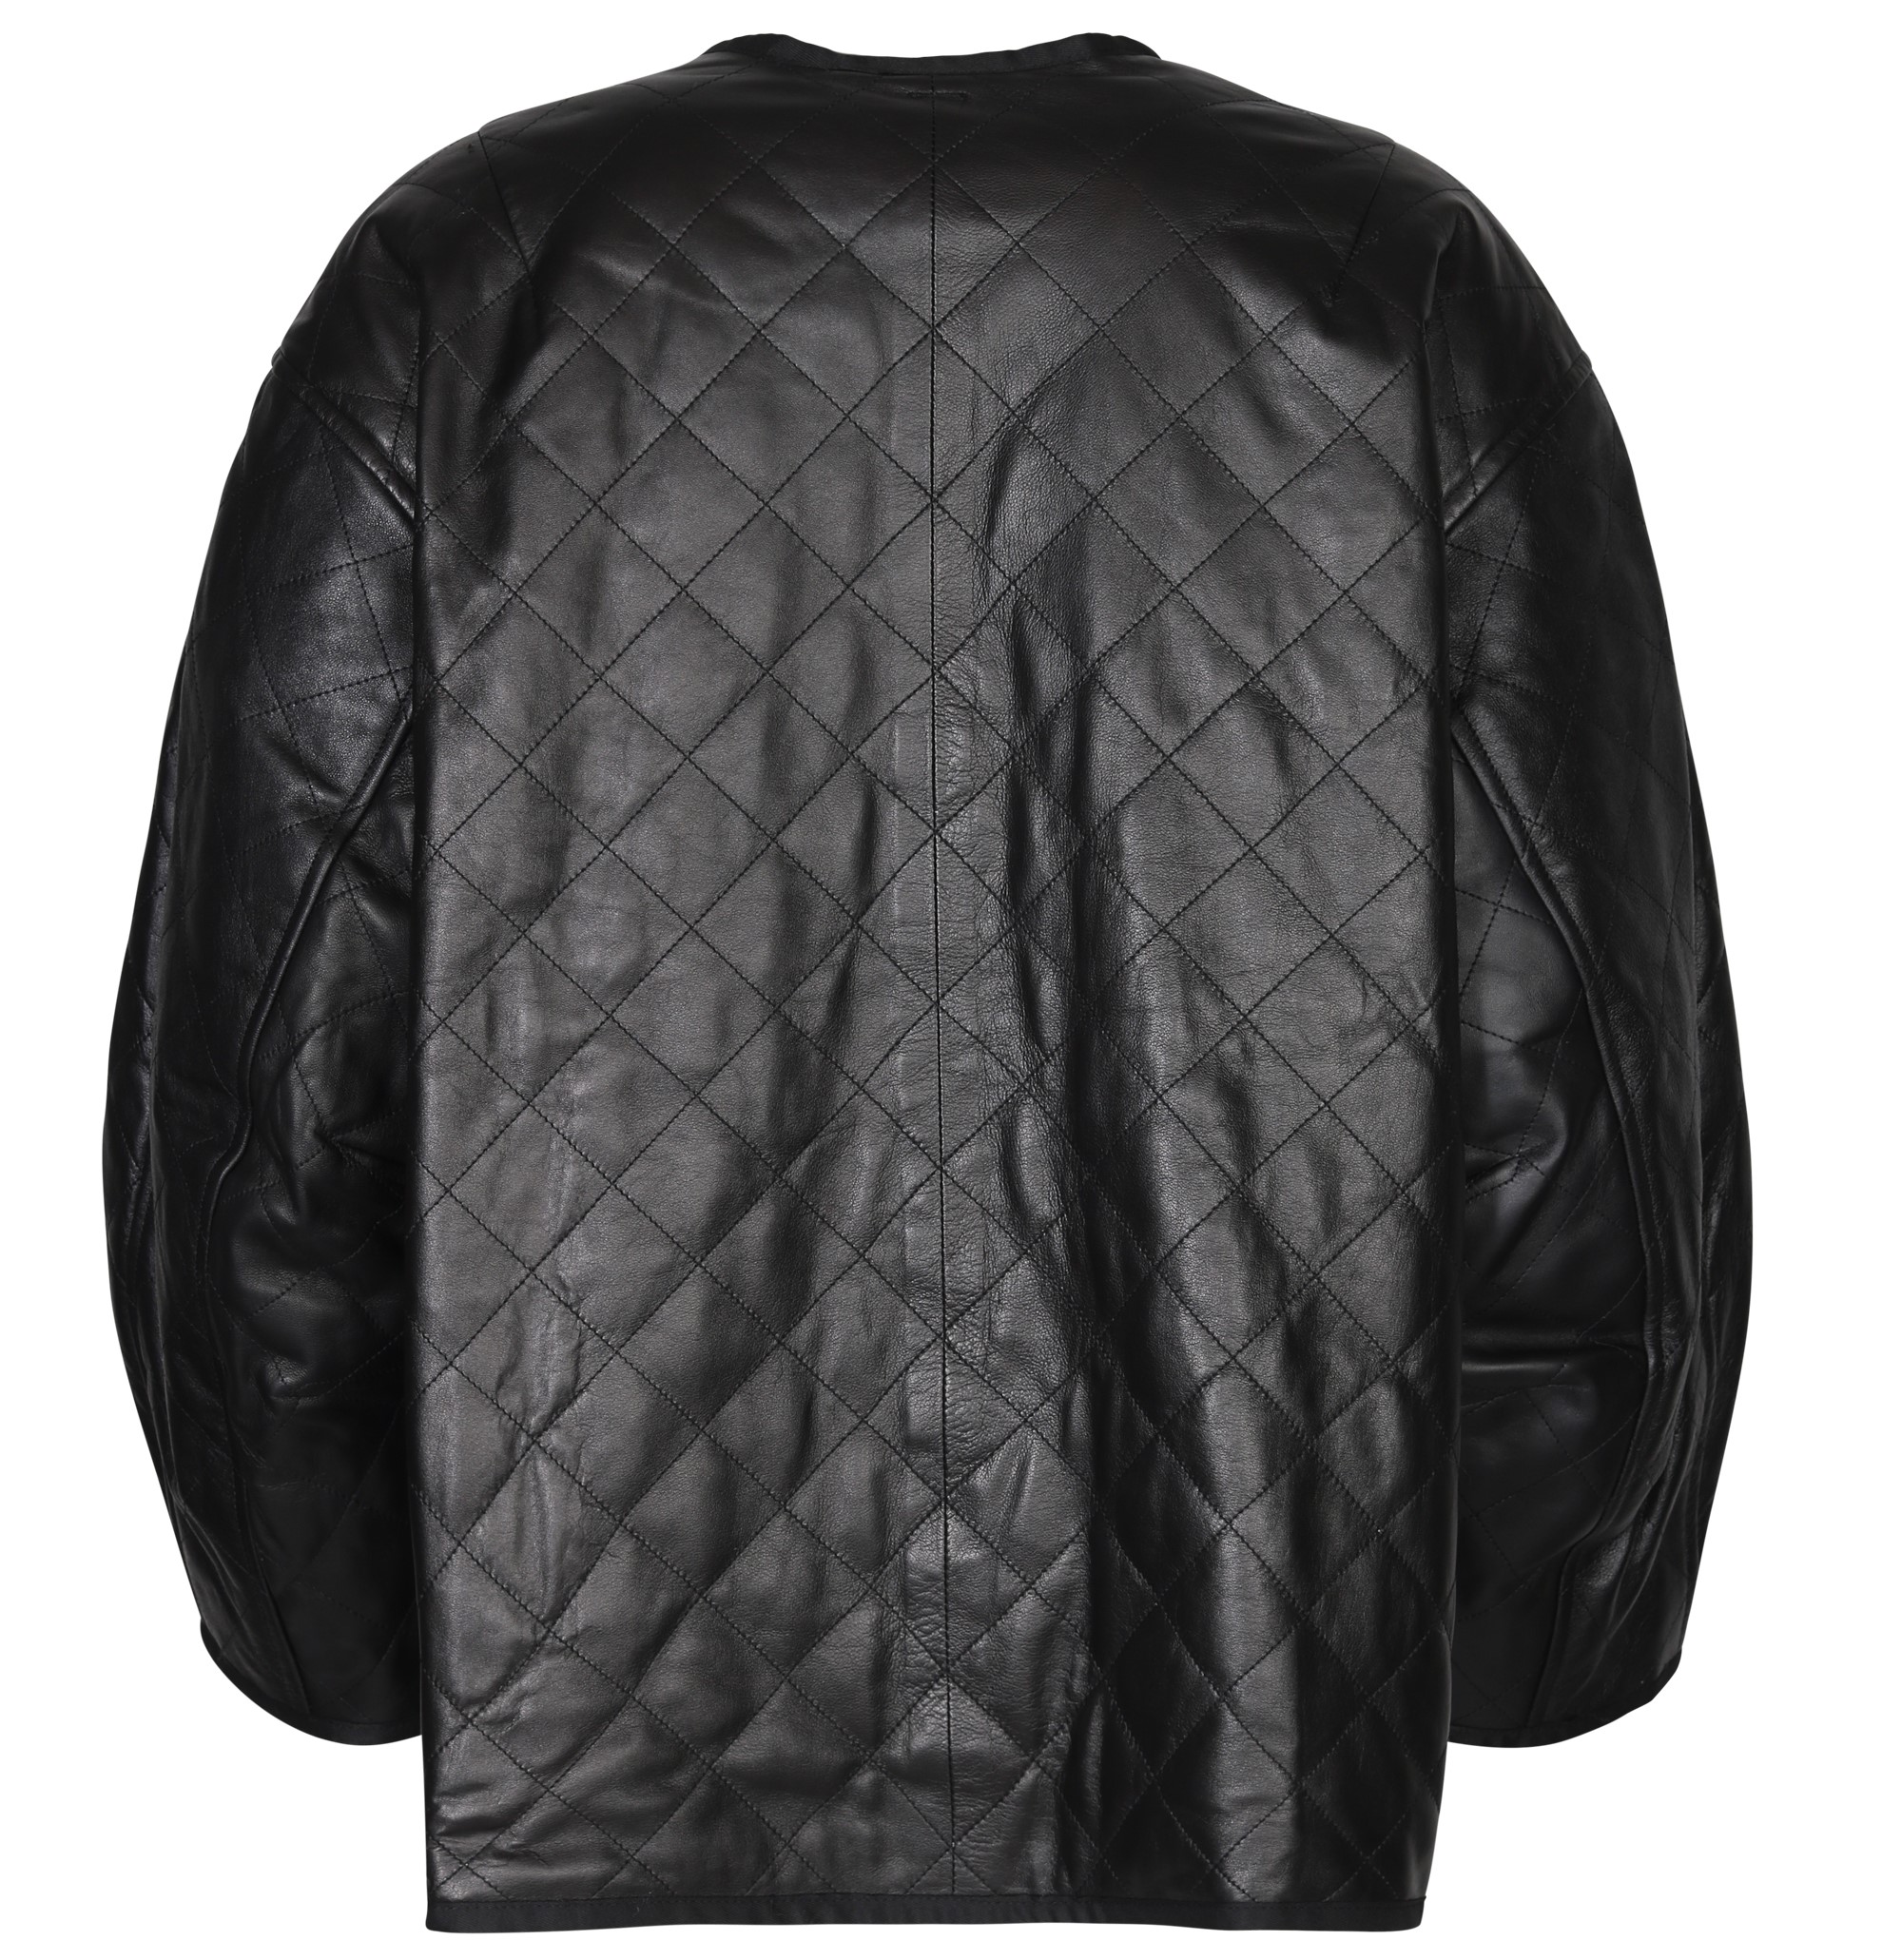 SOCIÉTÉ ANGELIQUE Mira Padded Leather Vest in Black